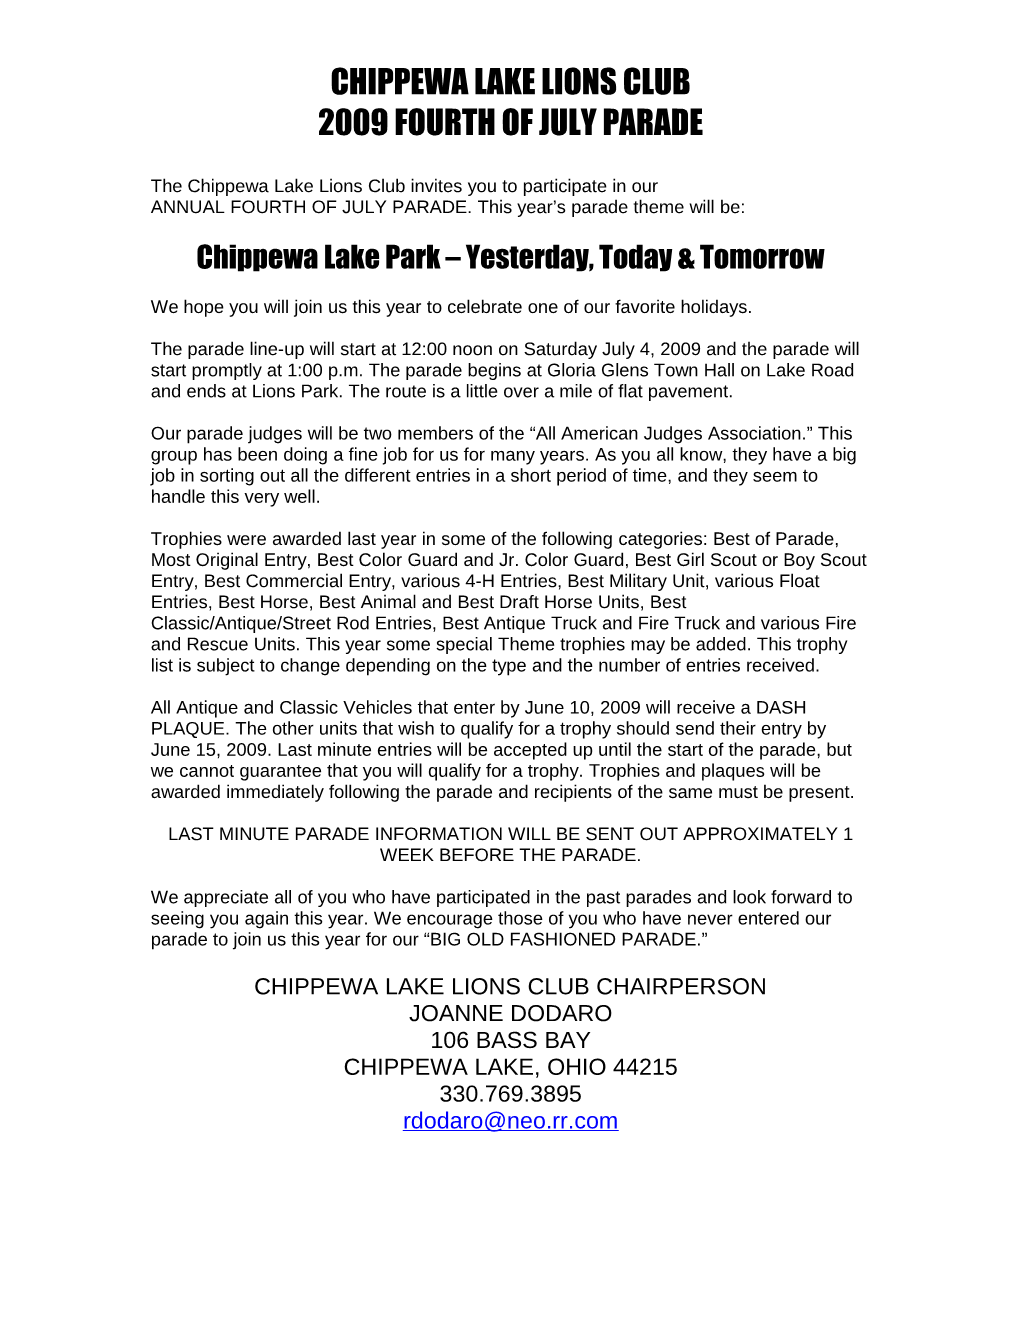 Chippewa Lake Lions Club